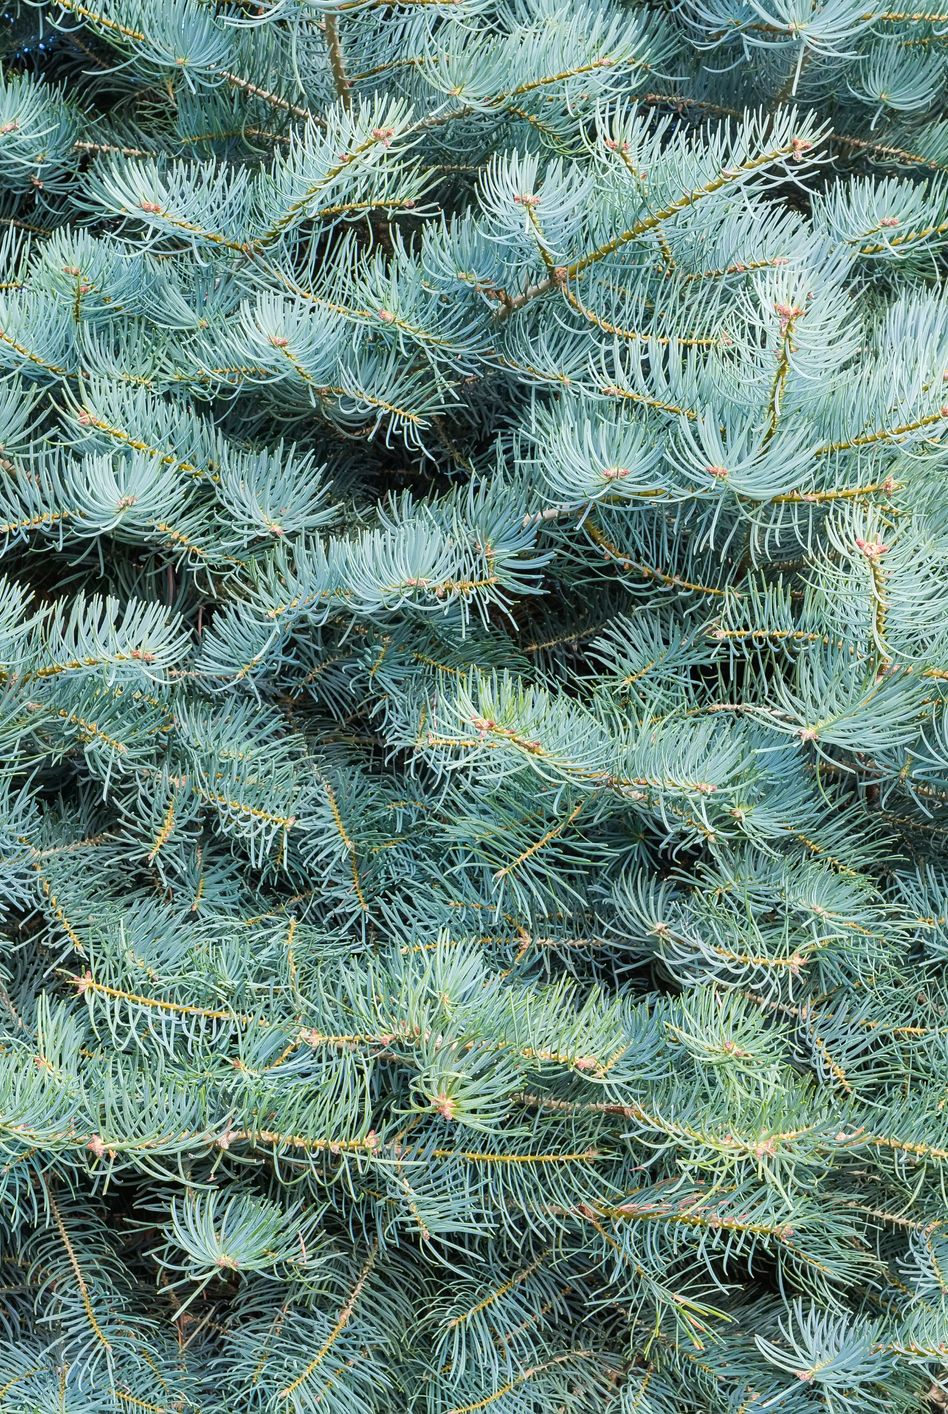 types of Christmas trees white fir